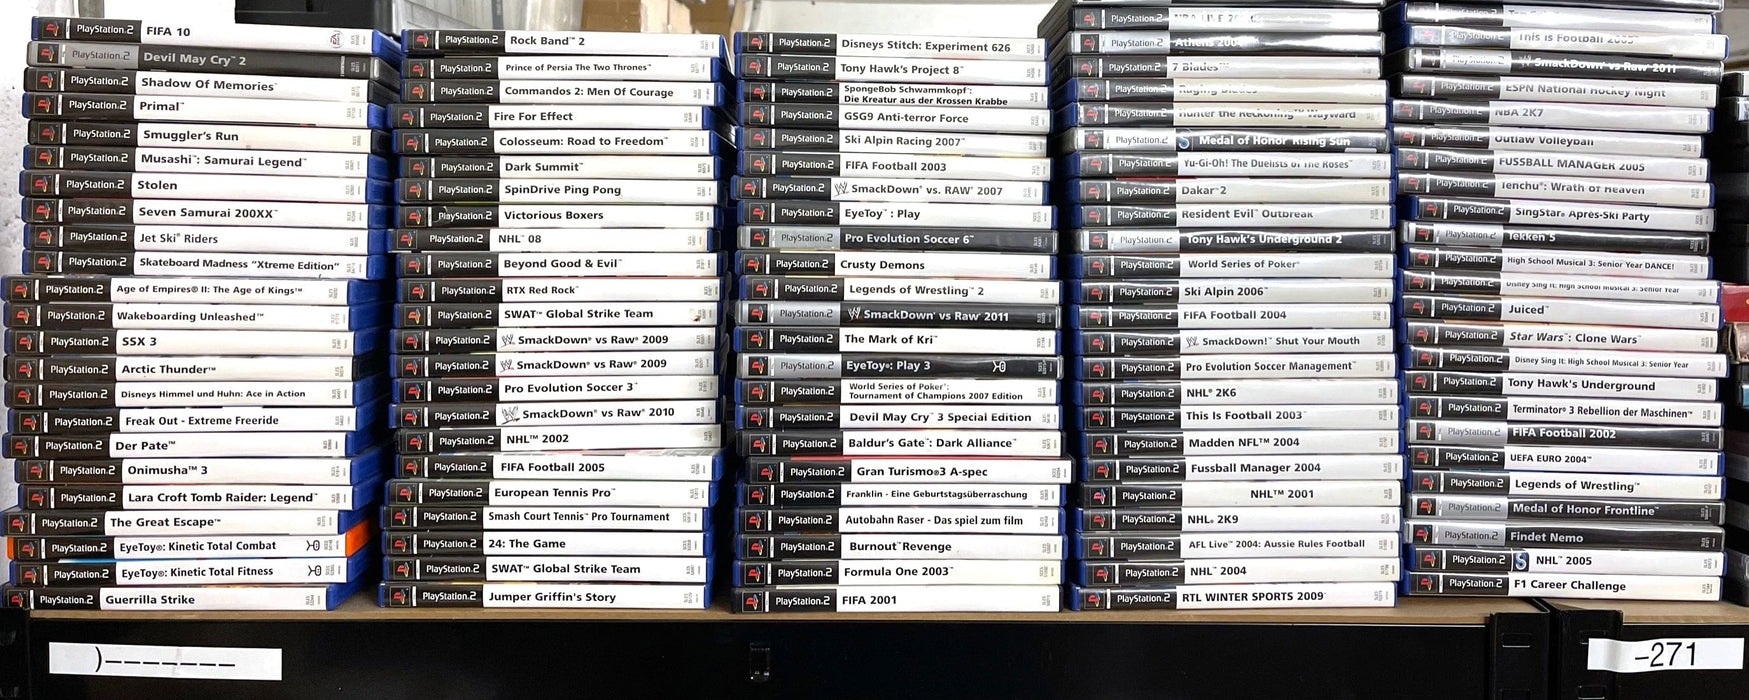 Glaciergames PlayStation 2 Game Dropship PlayStation 2 (Nr.694)